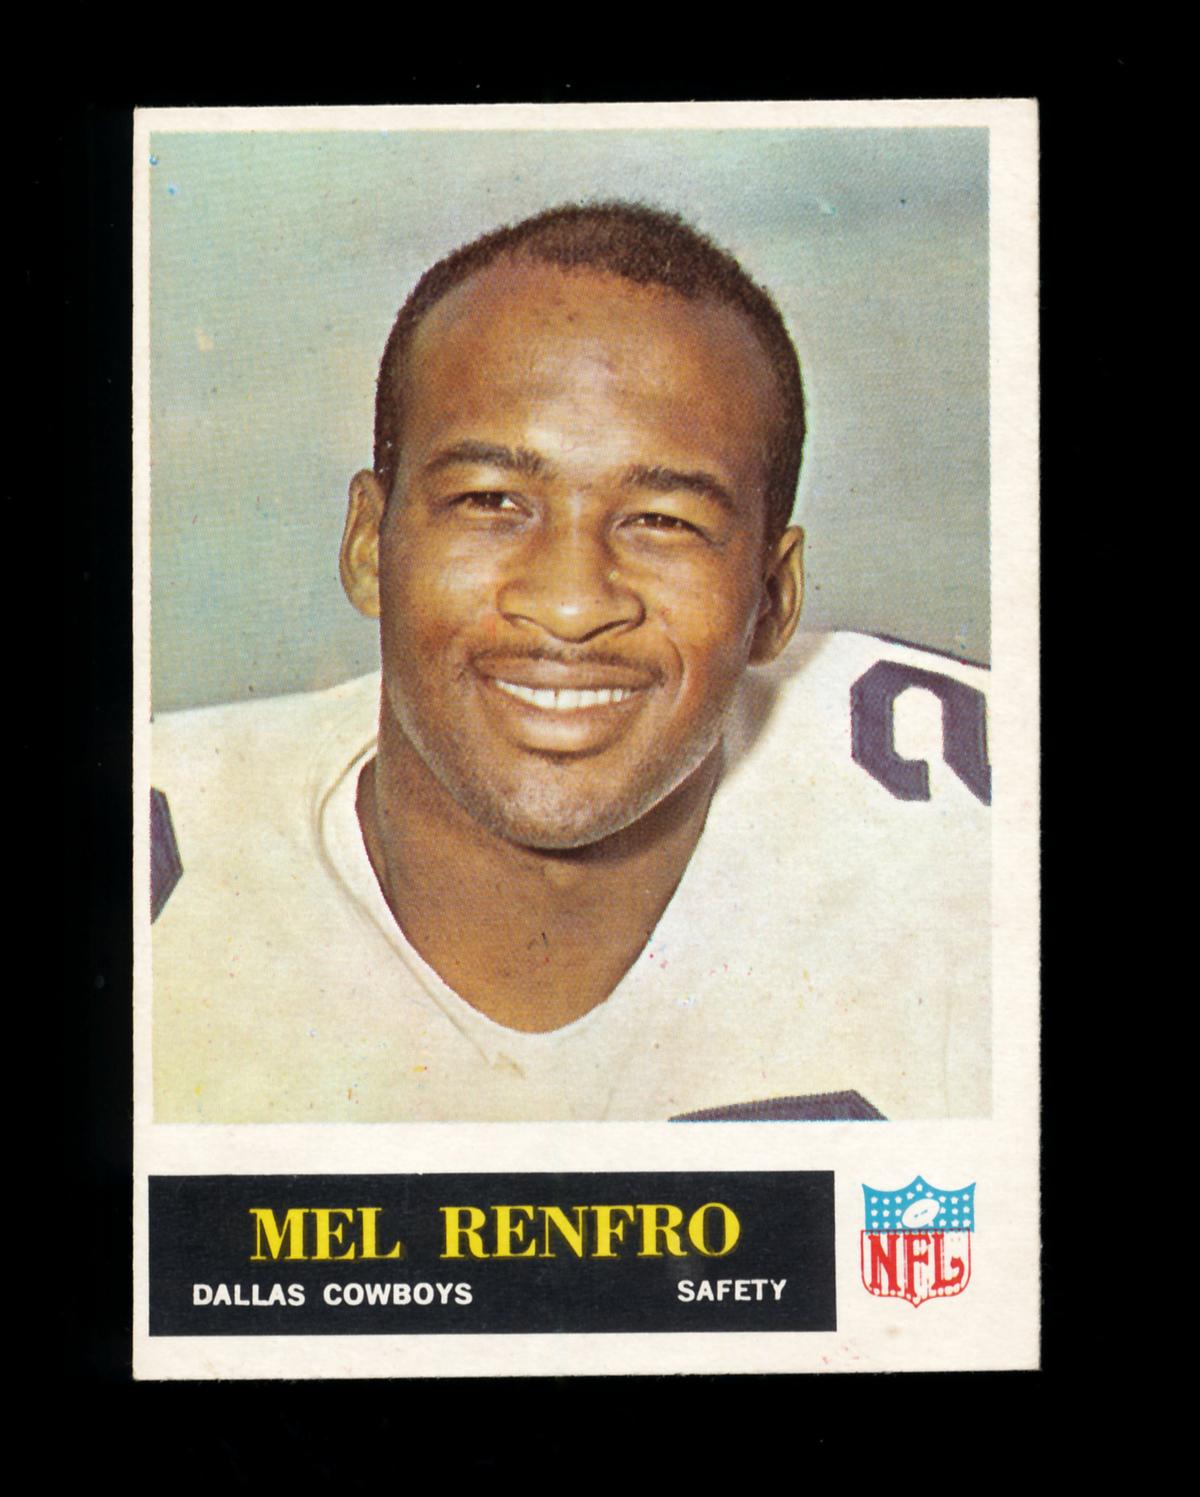 1965 Philadelphia Football Card #53 Rookie Hall of Famer Mel Renfro Dallas